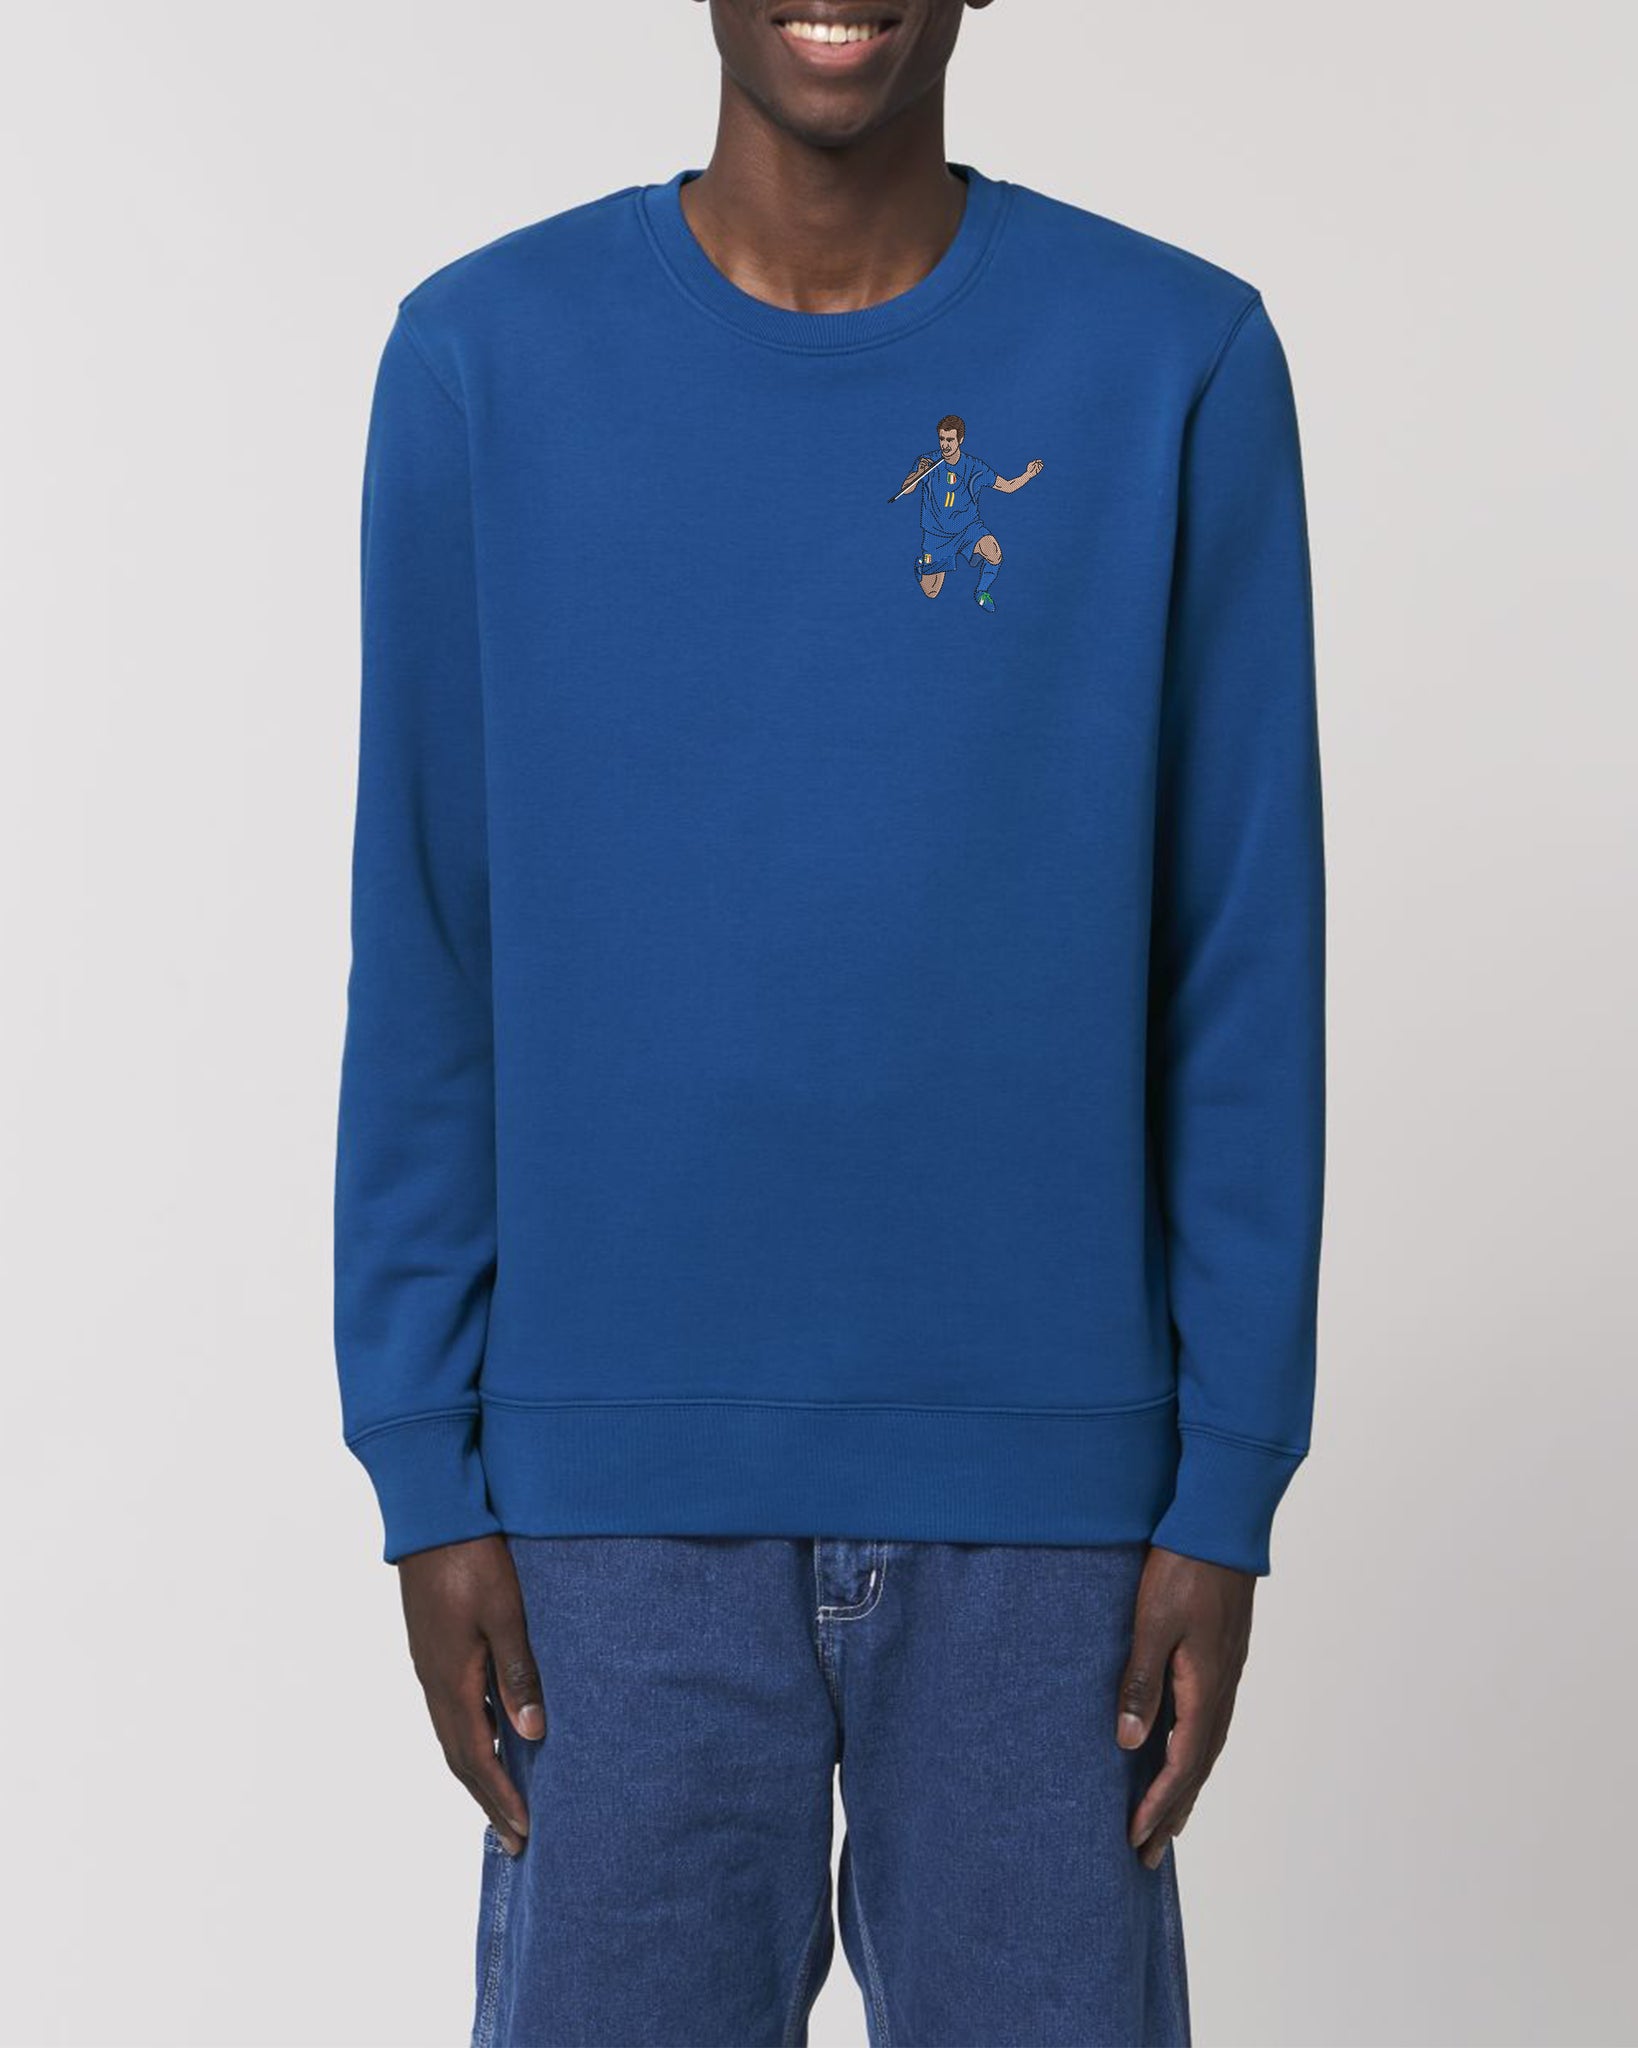 Mister Gila 🎻 embroidered sweatshirt